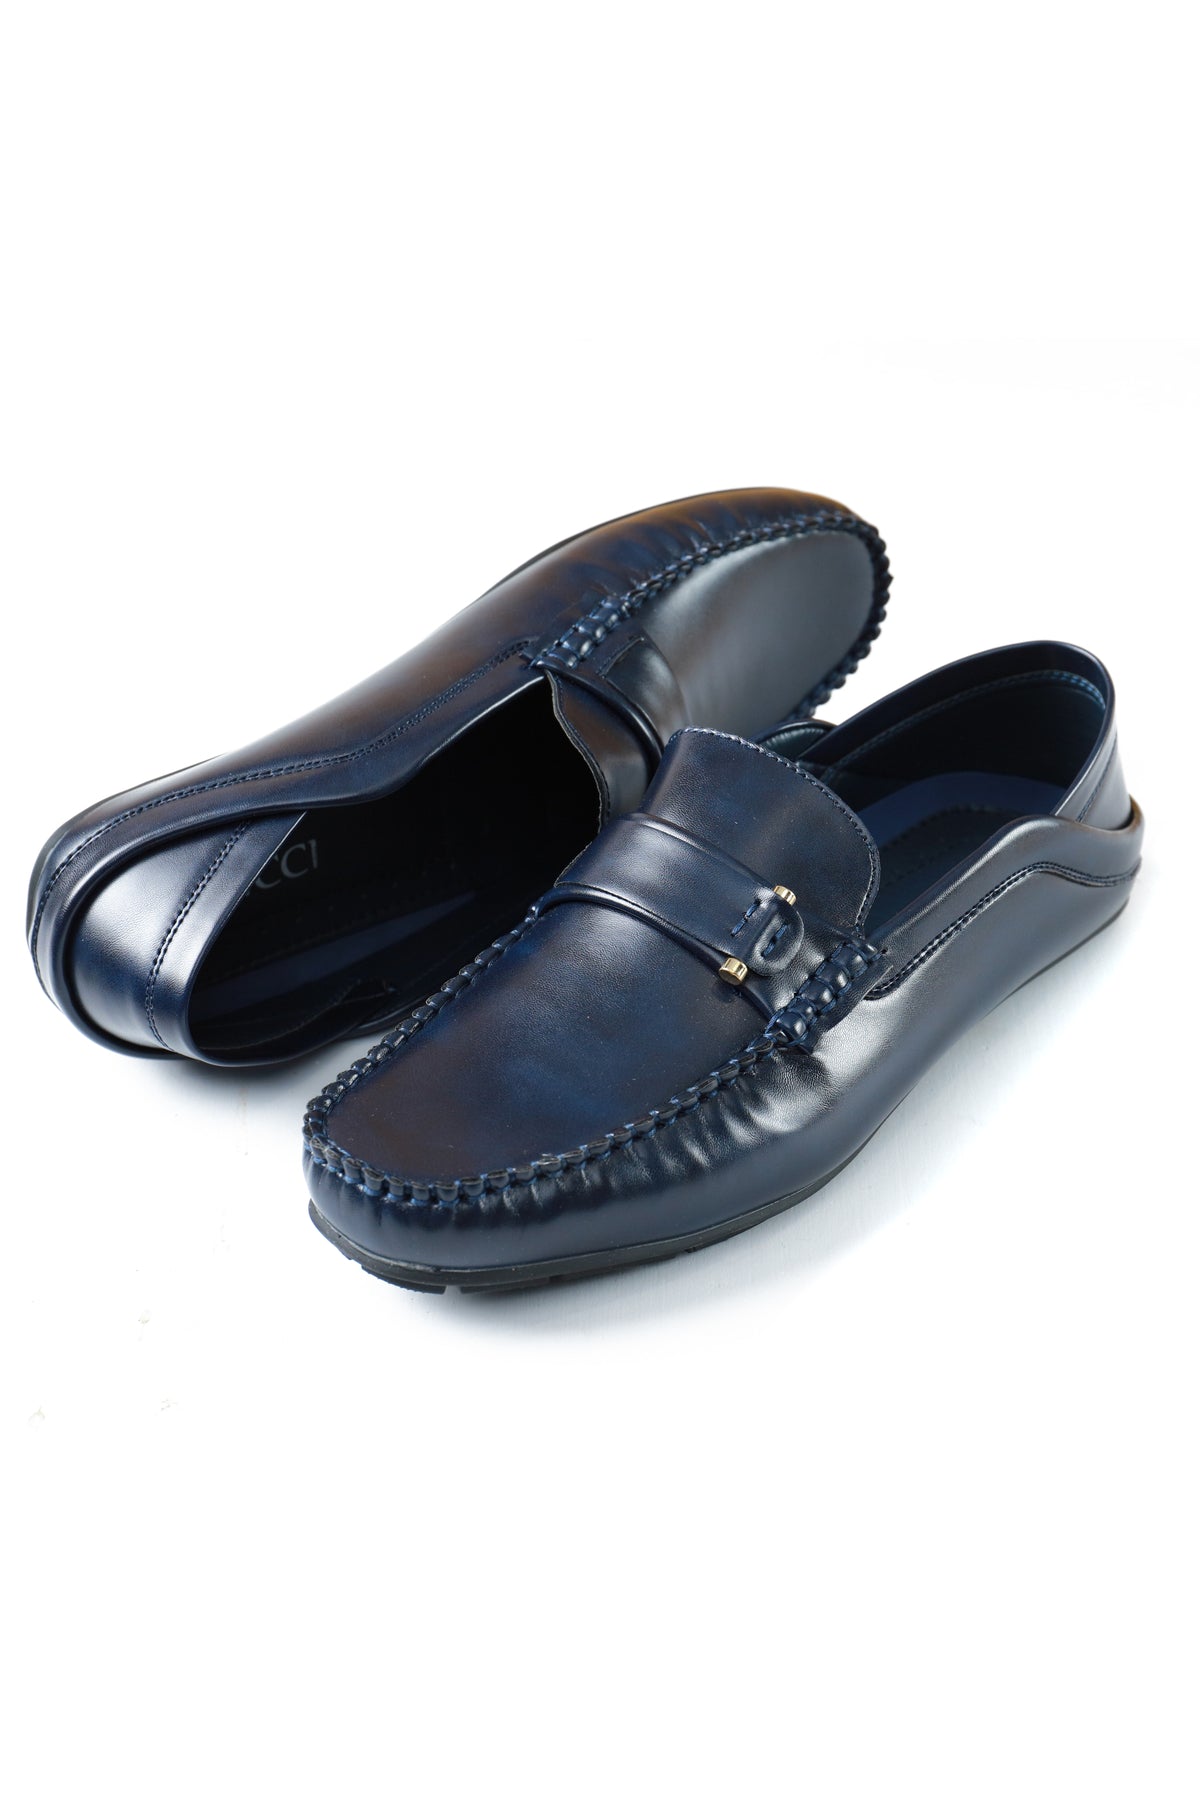 DeRucci Mens Casual Shoe